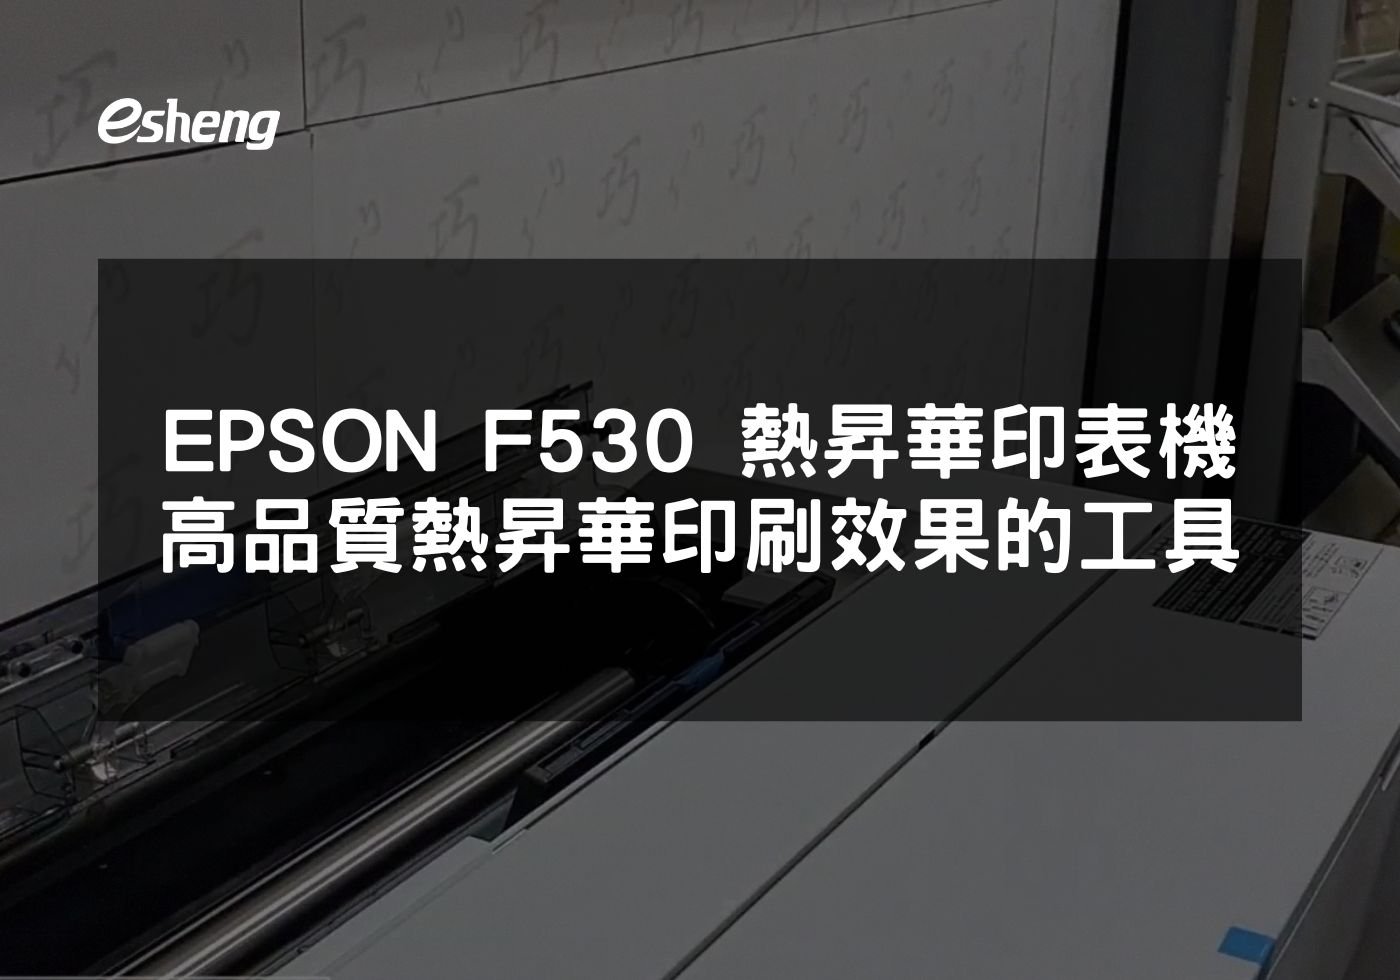 EPSON F530 熱昇華印表機 打造高品質熱昇華印刷效果的專業工具